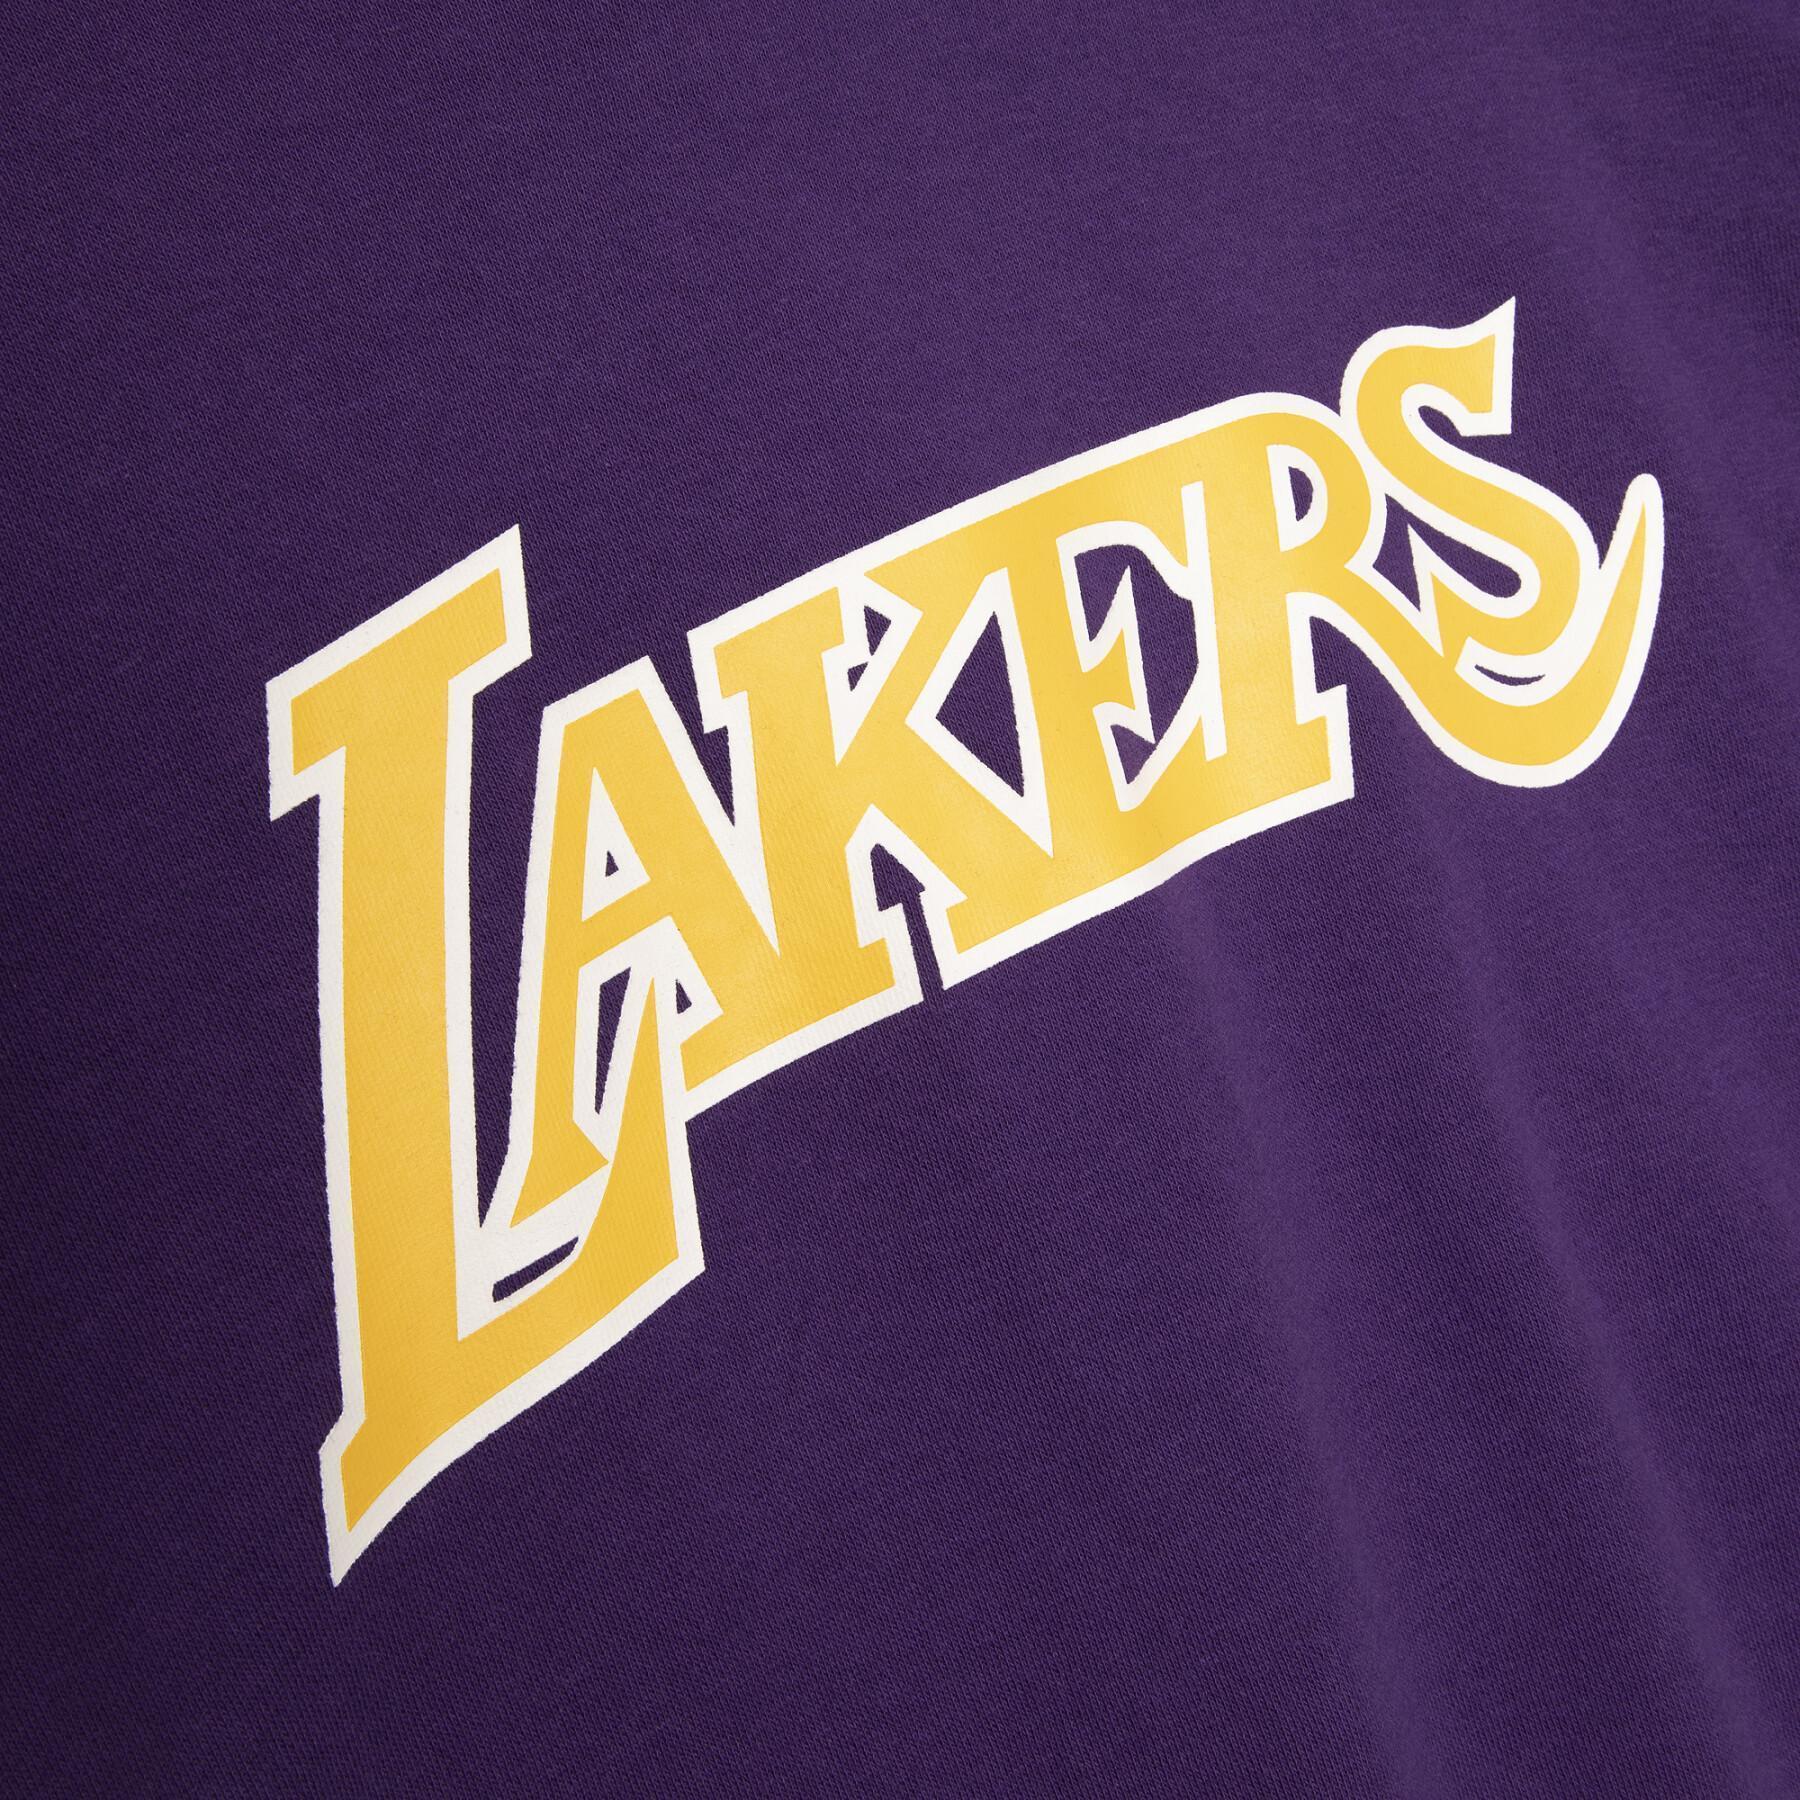 Sweatshirt sudadera de manga corta Los Angeles Lakers